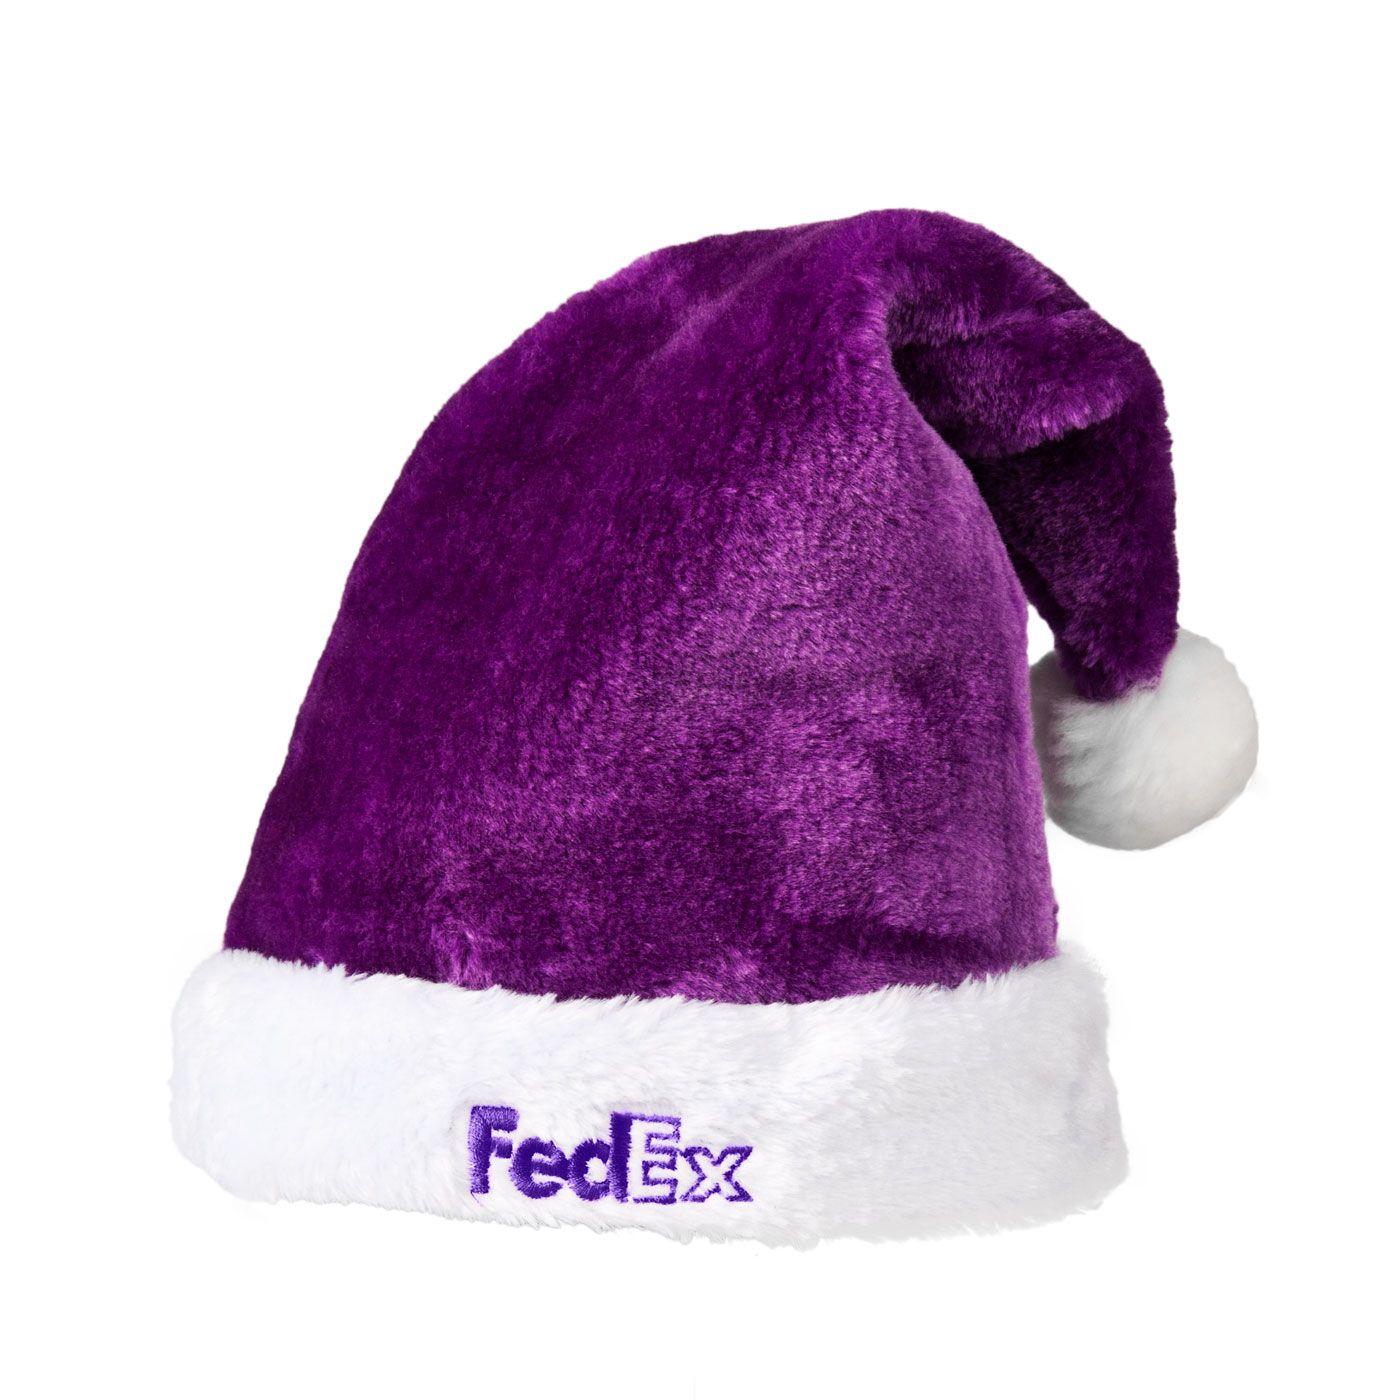 Christmas Hats Logo - The FedEx Company Store